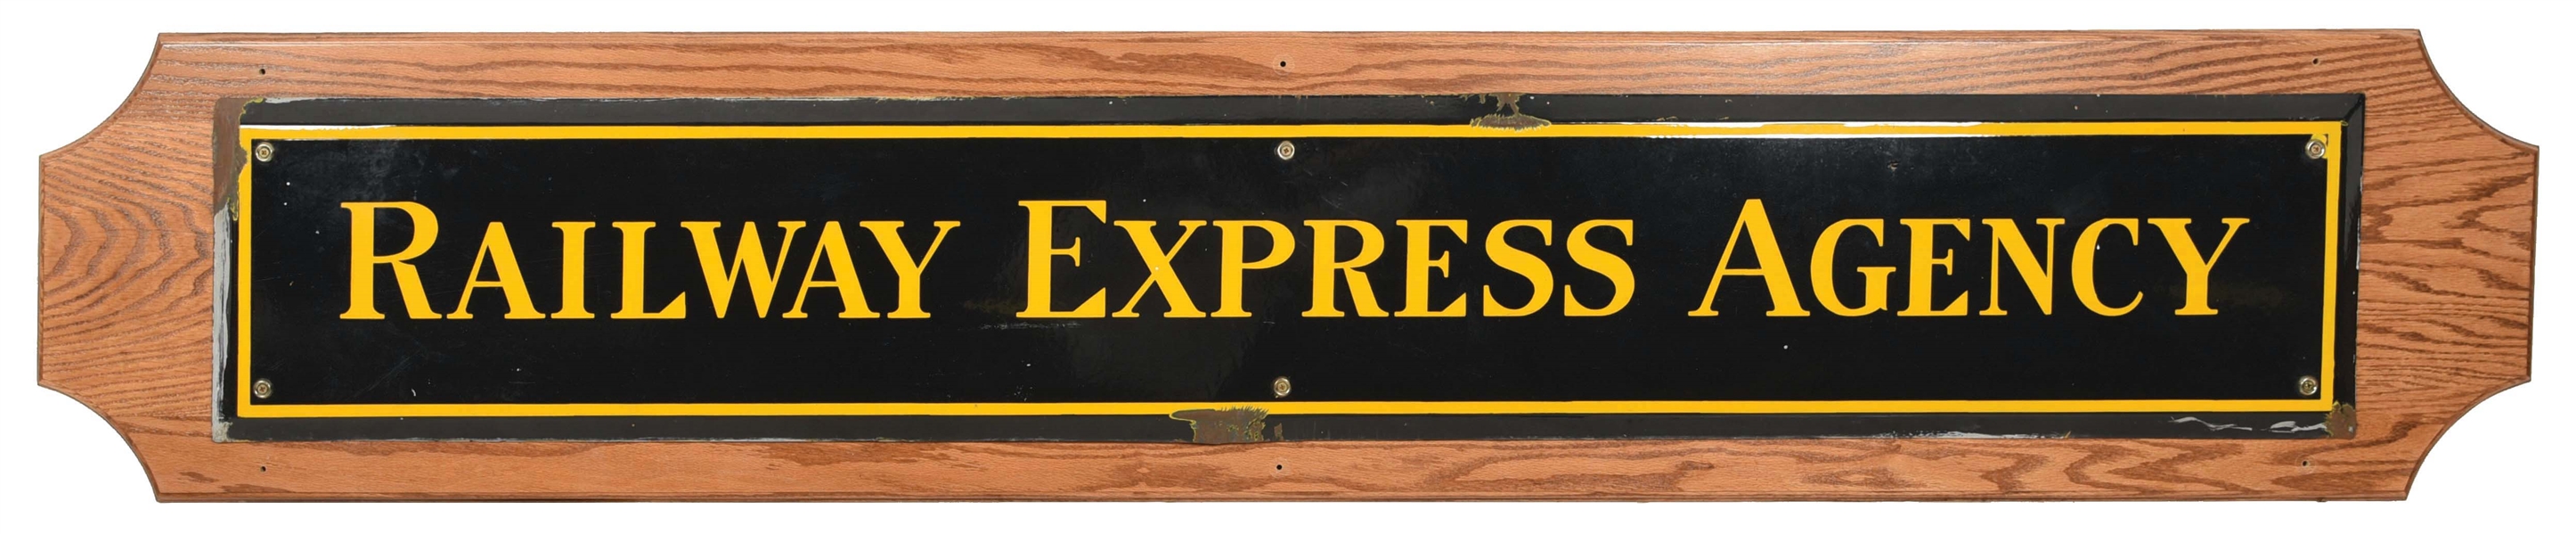 RAILWAY EXPRESS AGENCY PORCELAIN DEPOT SIGN W/ SELF FRAMED EDGE MOUNTED ON WOOD. 